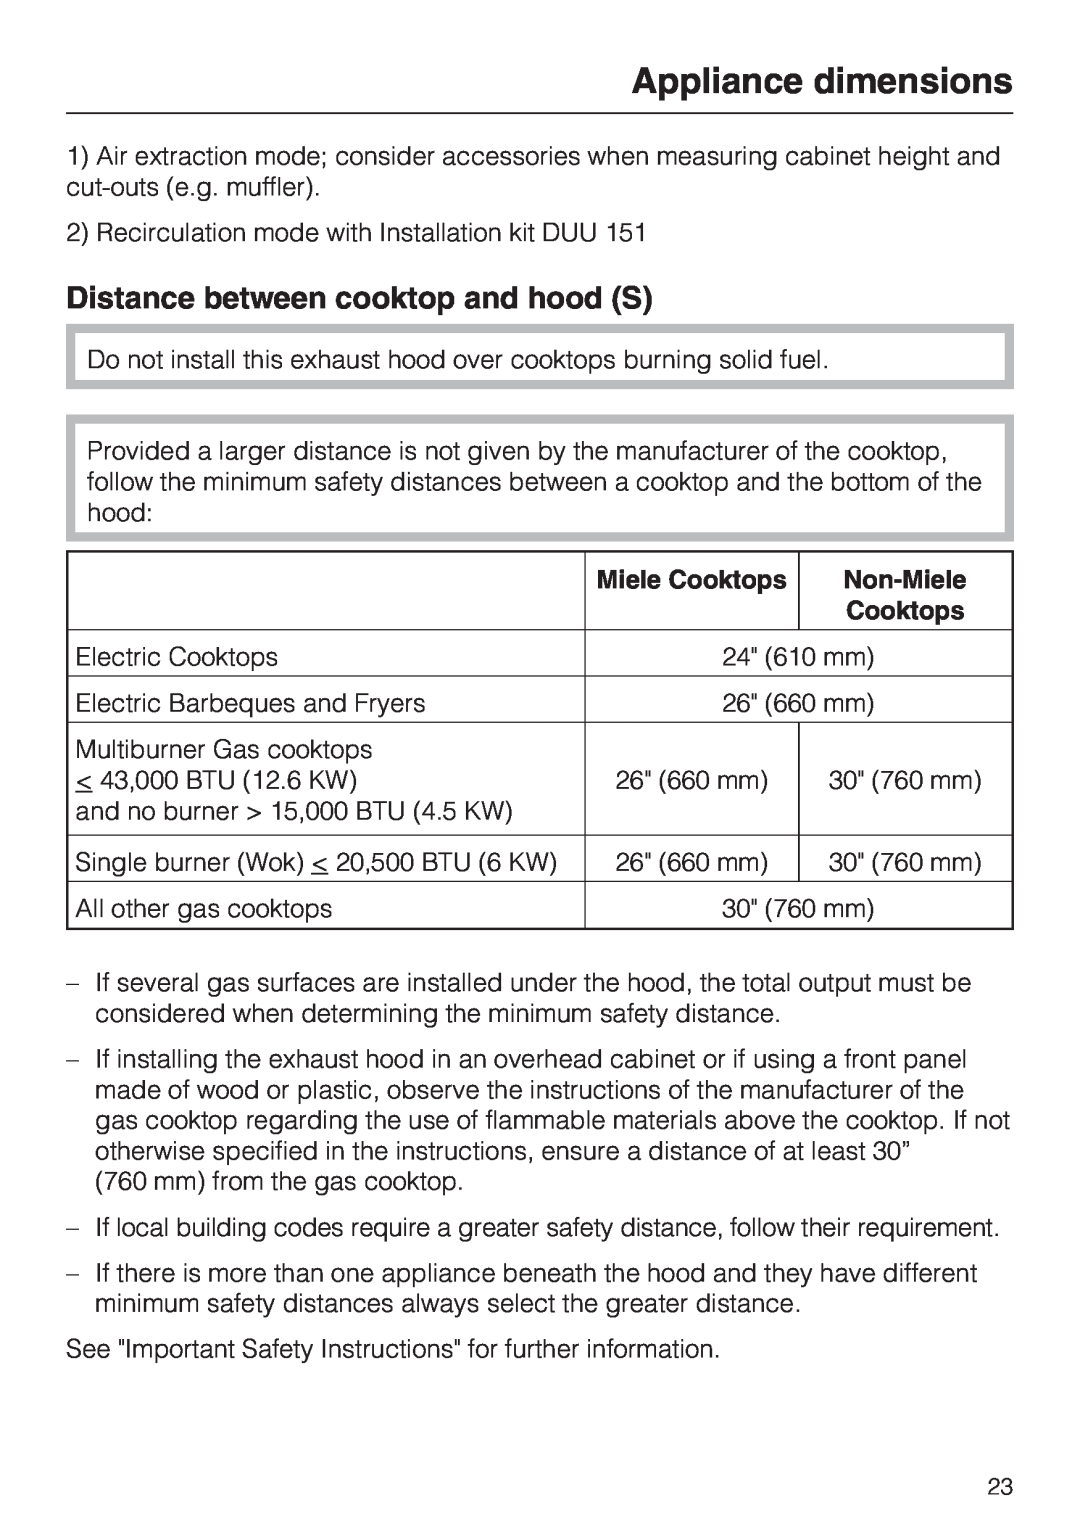 Miele DA 3490, DA 3460, DA 3480 Distance between cooktop and hood S, Miele Cooktops, Non-Miele, Appliance dimensions 